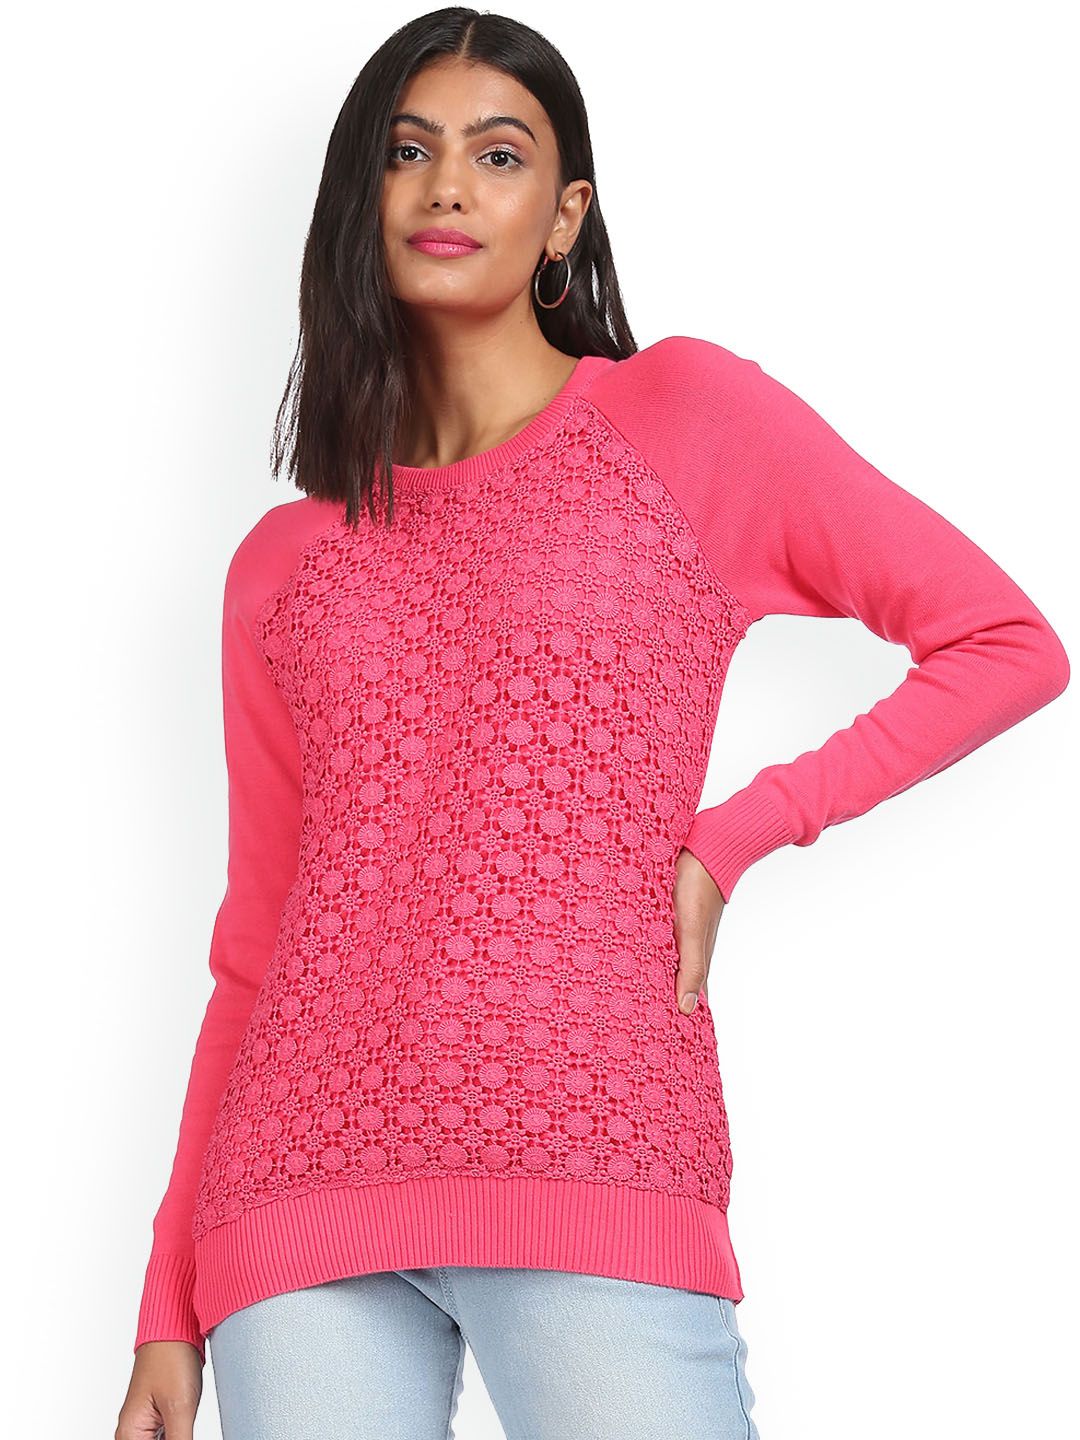 Sugr Women Fuchsia Round Neck Lace Sweater Price in India